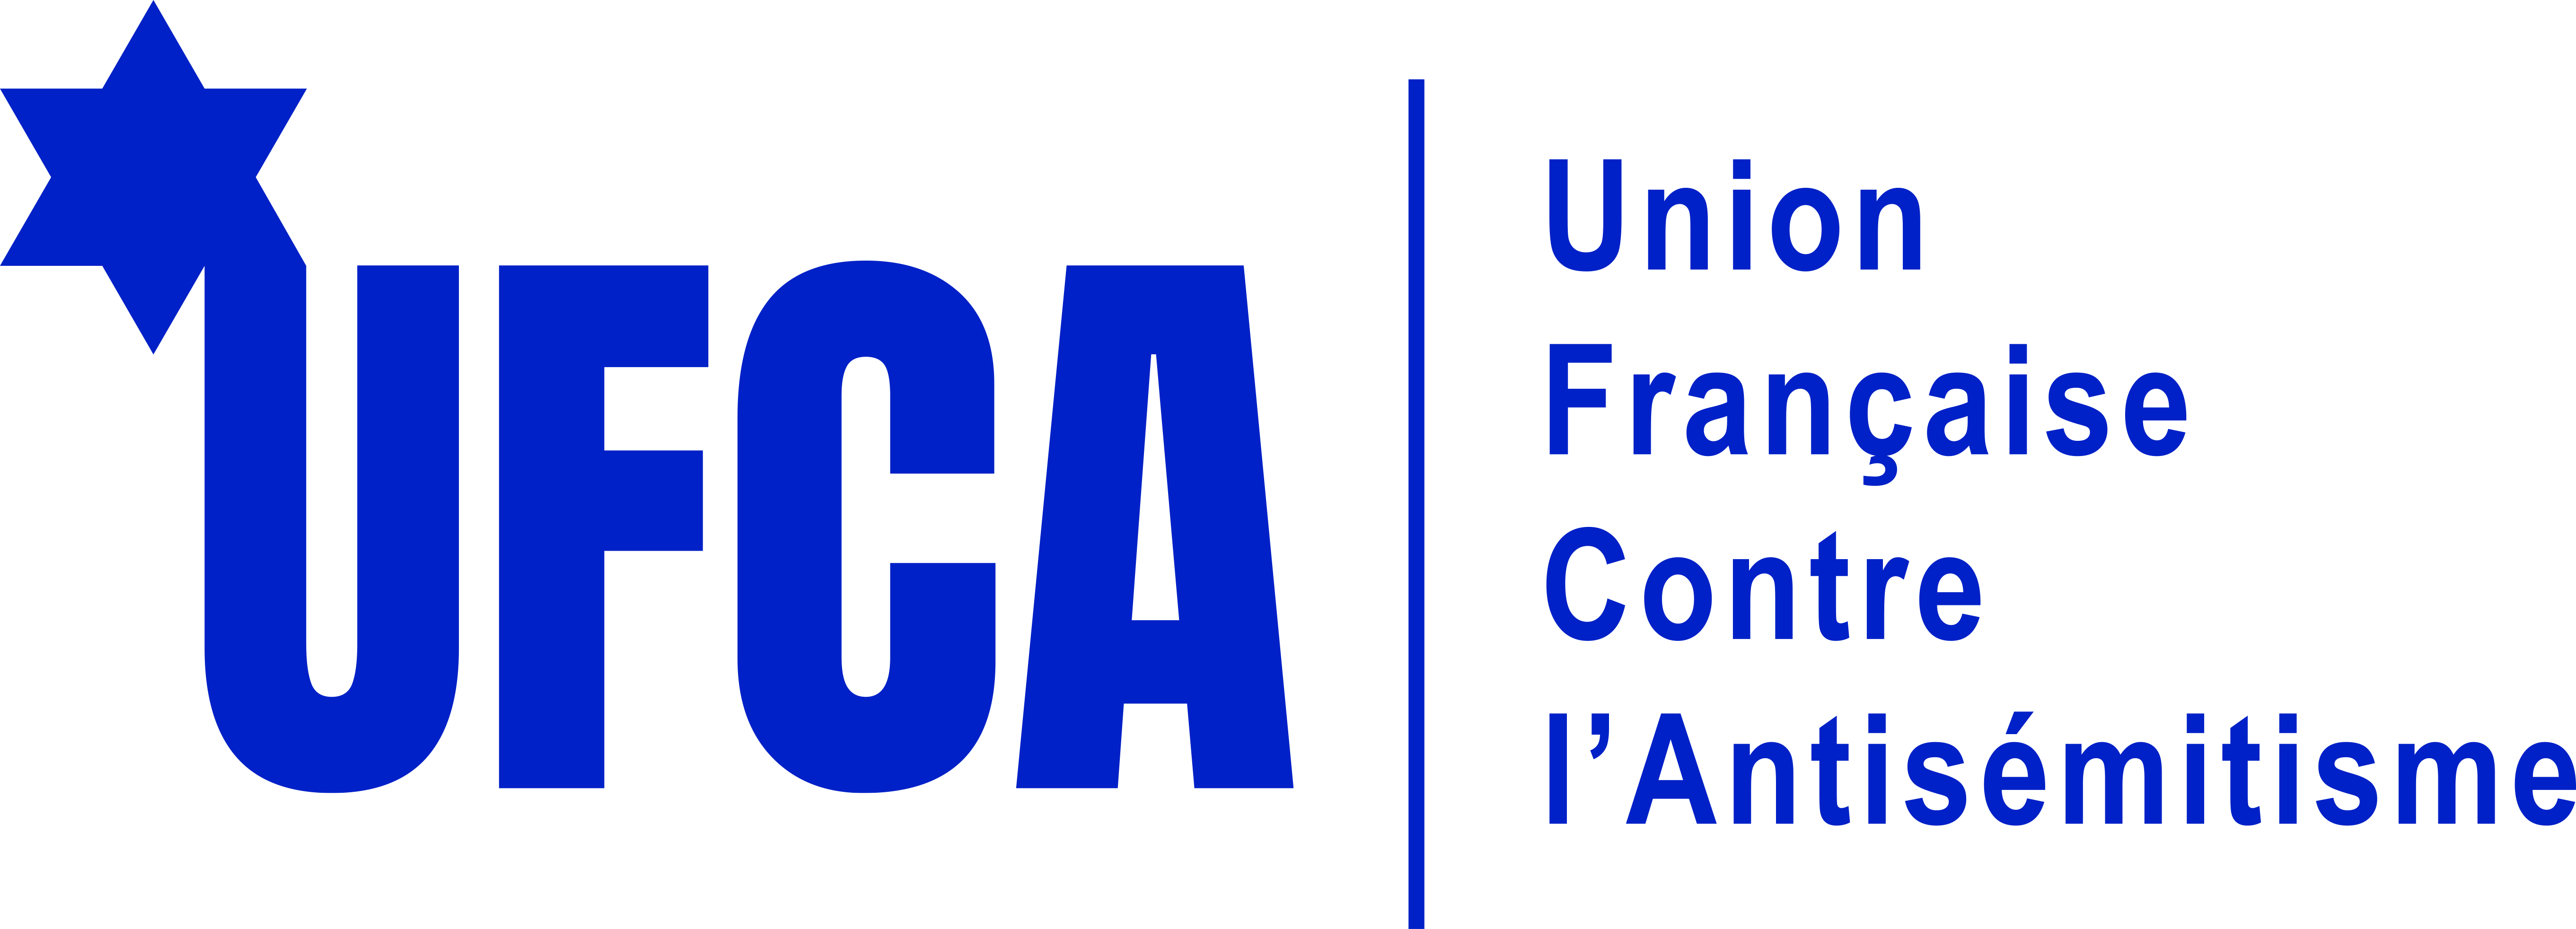 UFCA Logo